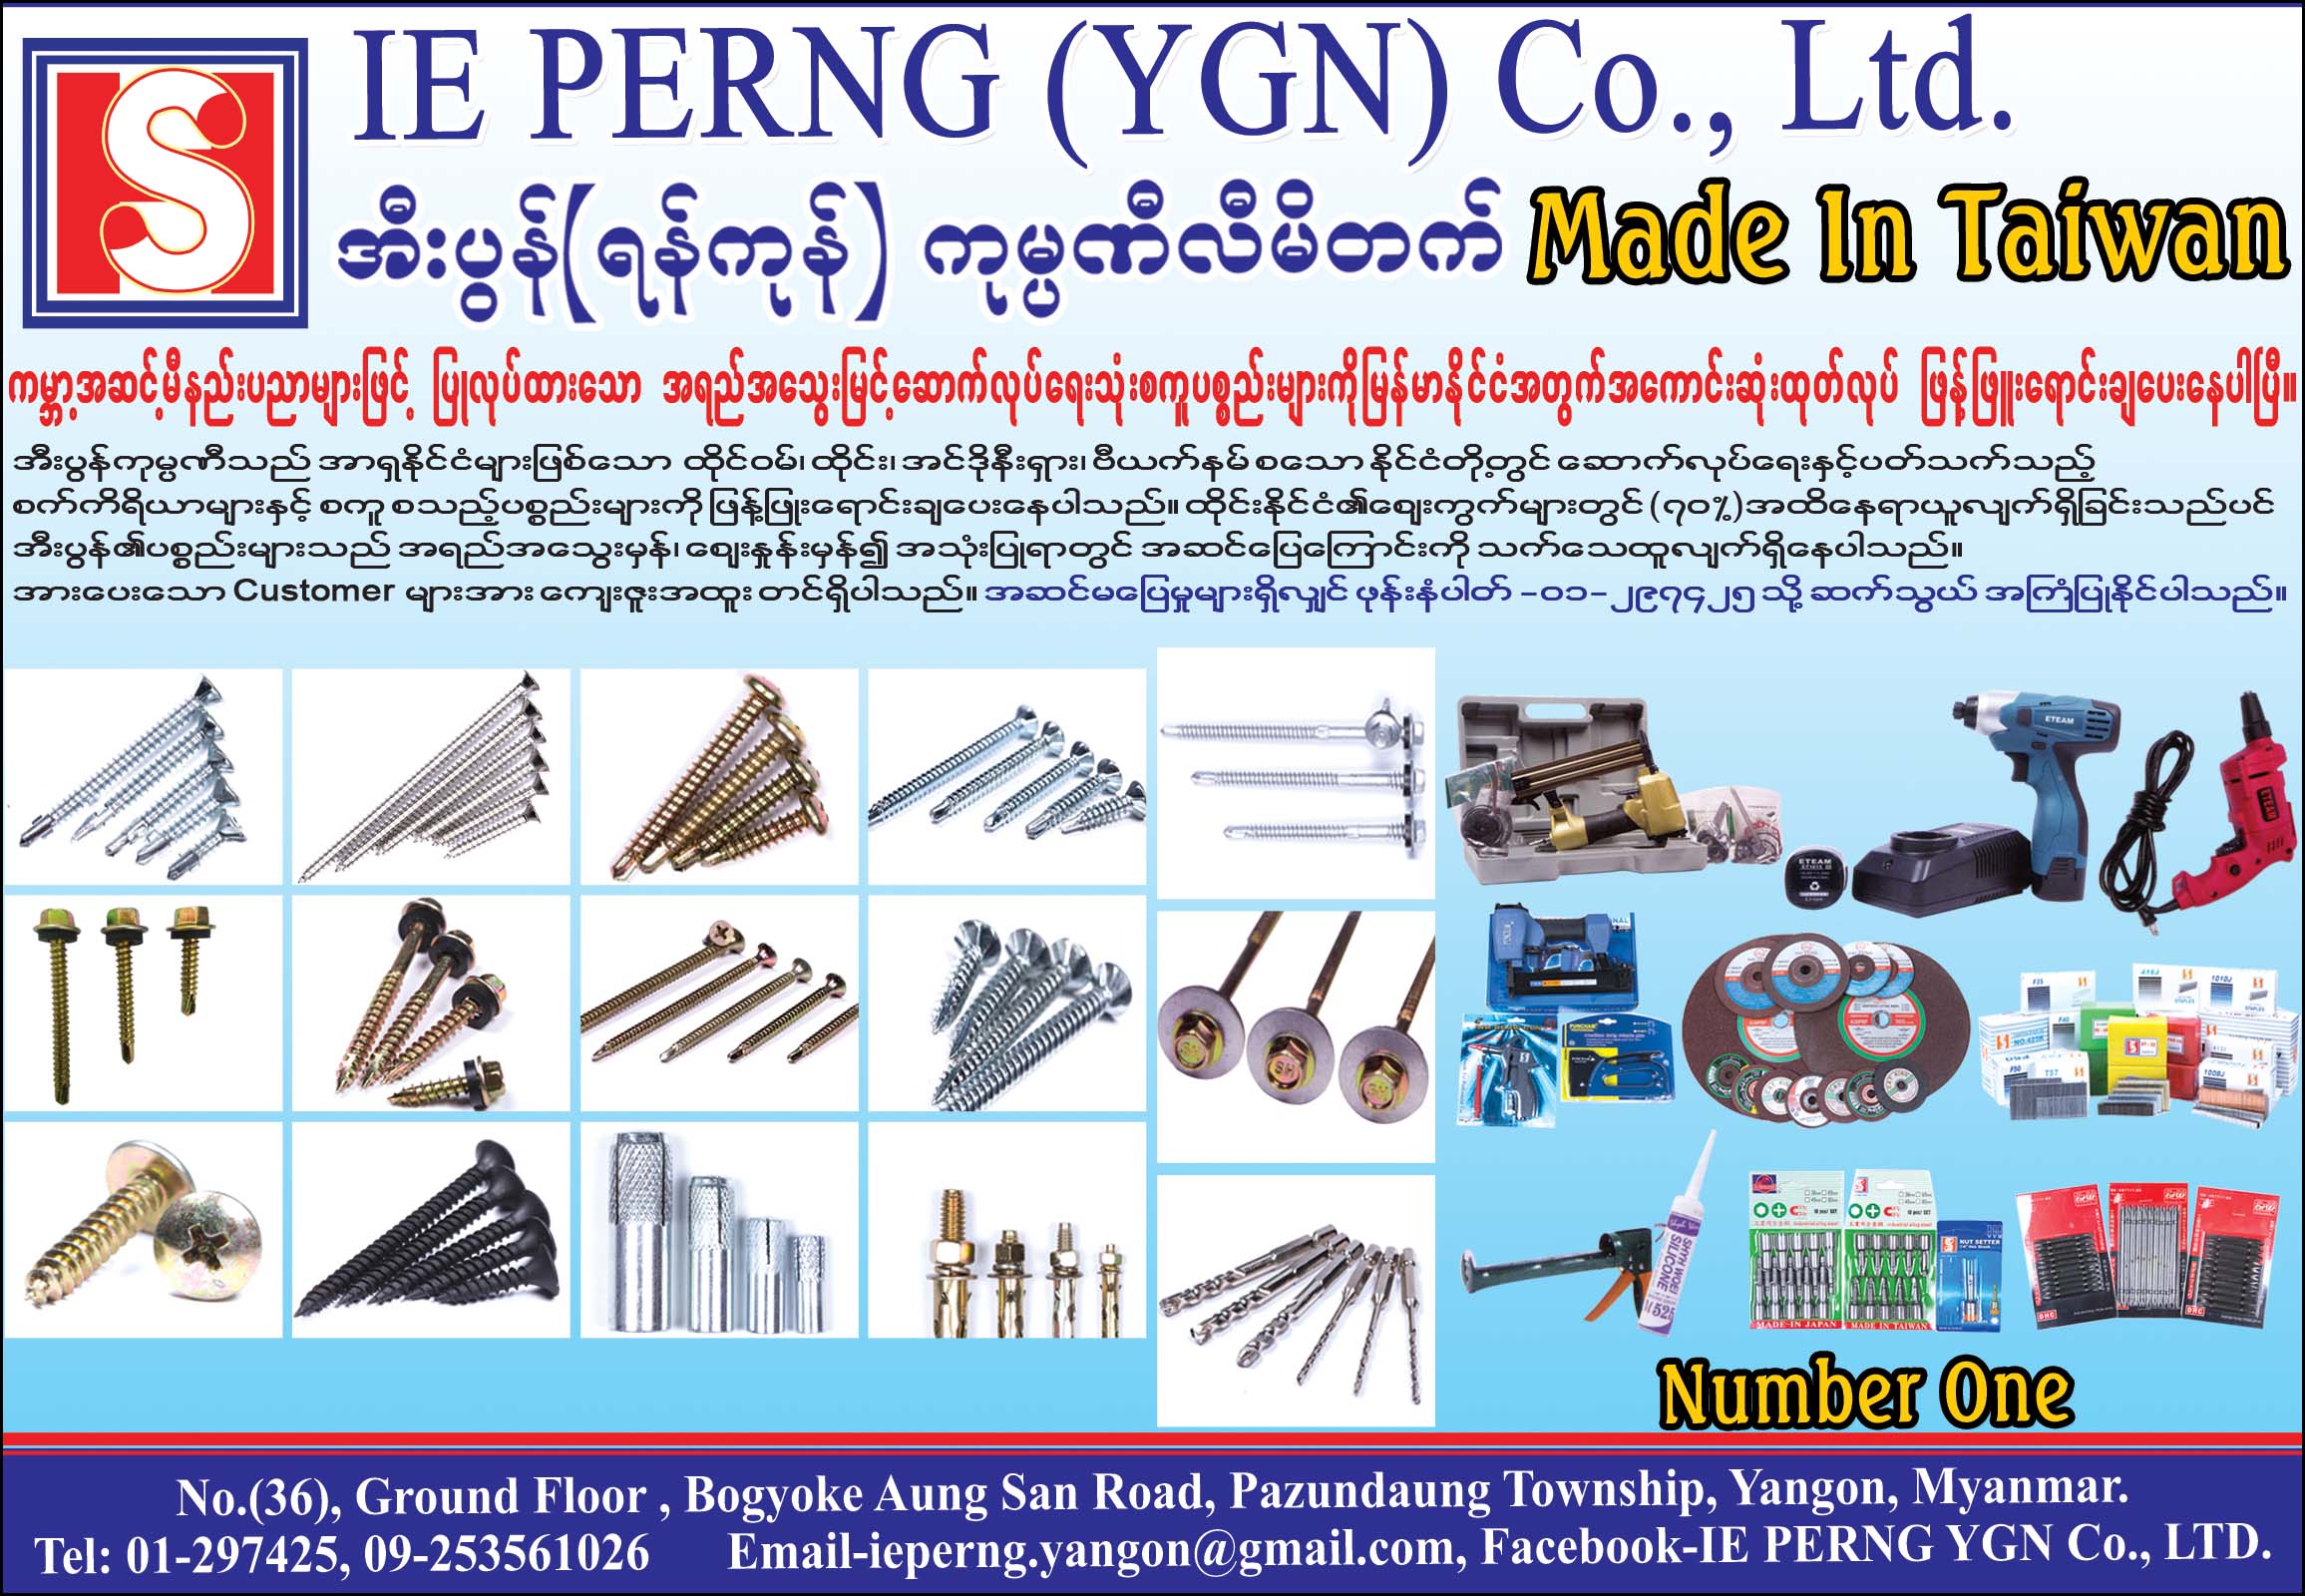 IE Perng (Ygn) Co., Ltd.